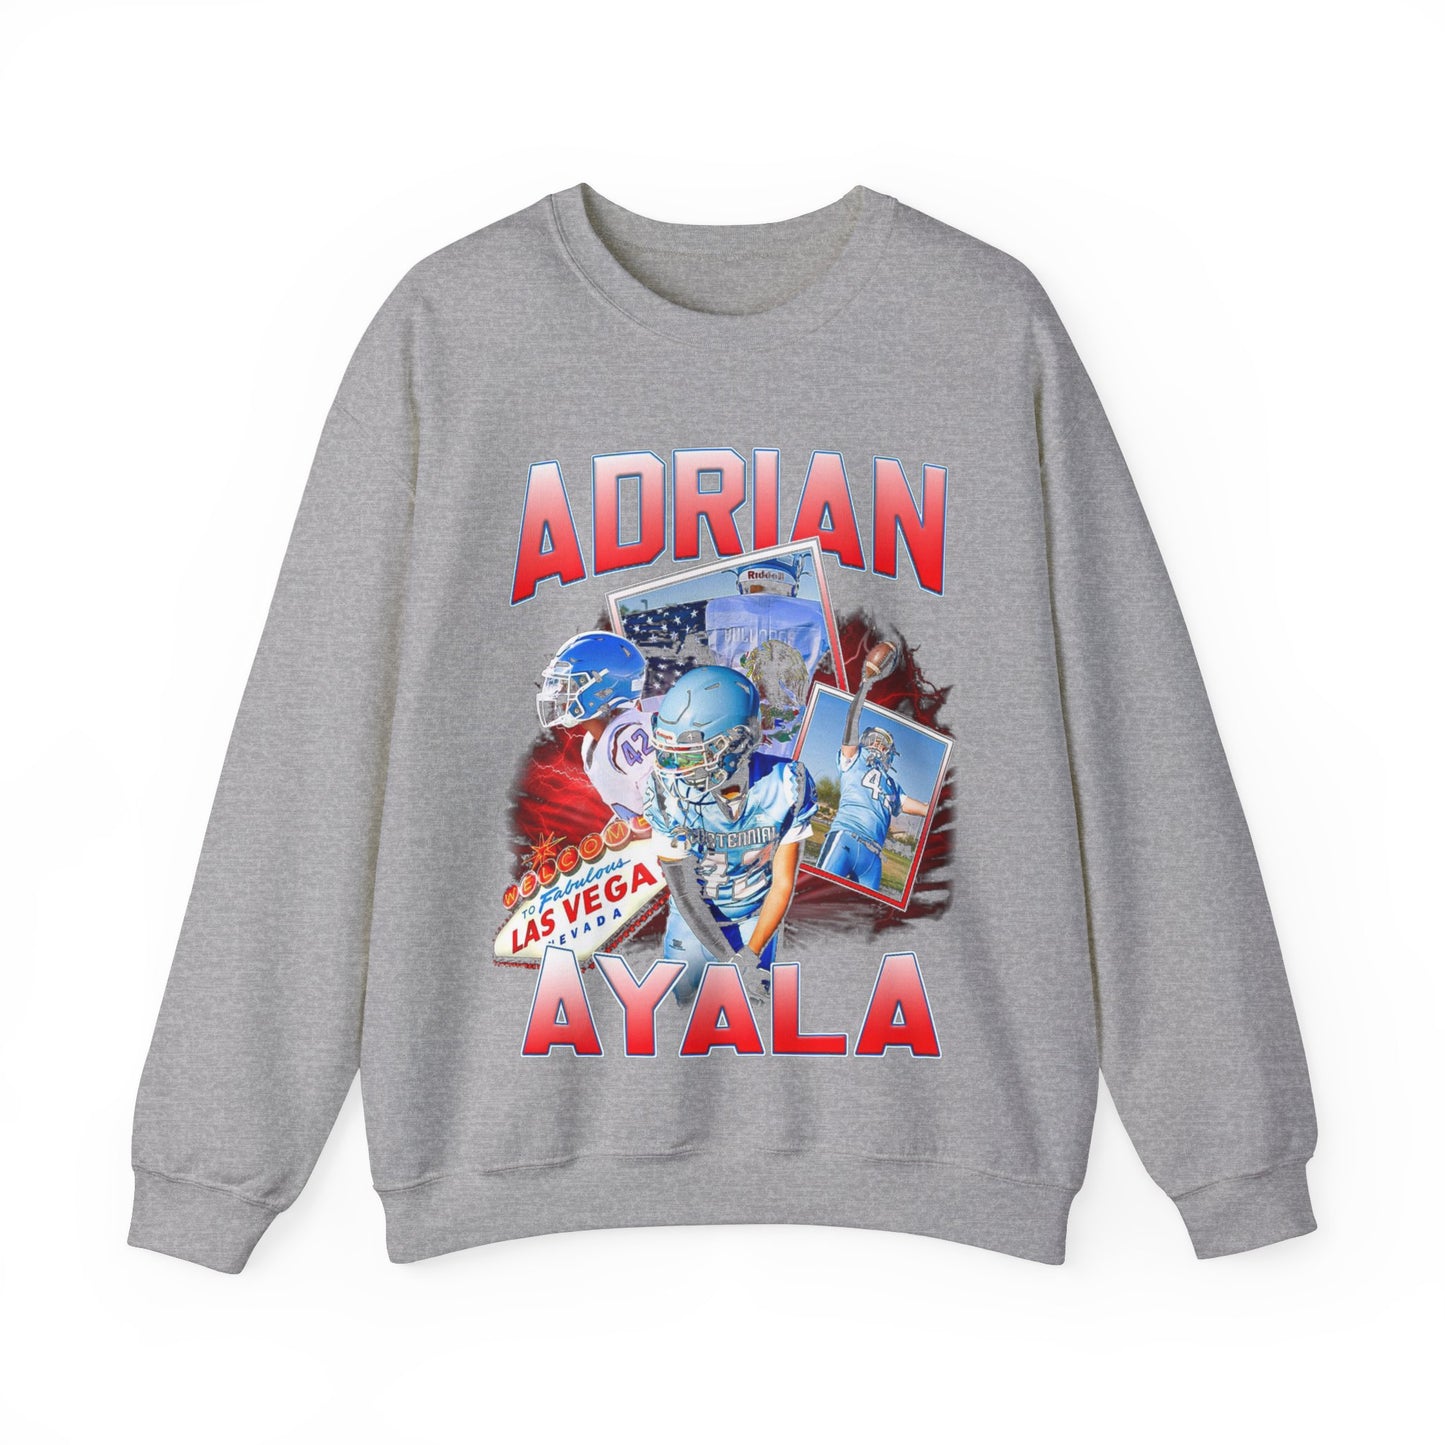 Adrian Ayala Crewneck Sweatshirt